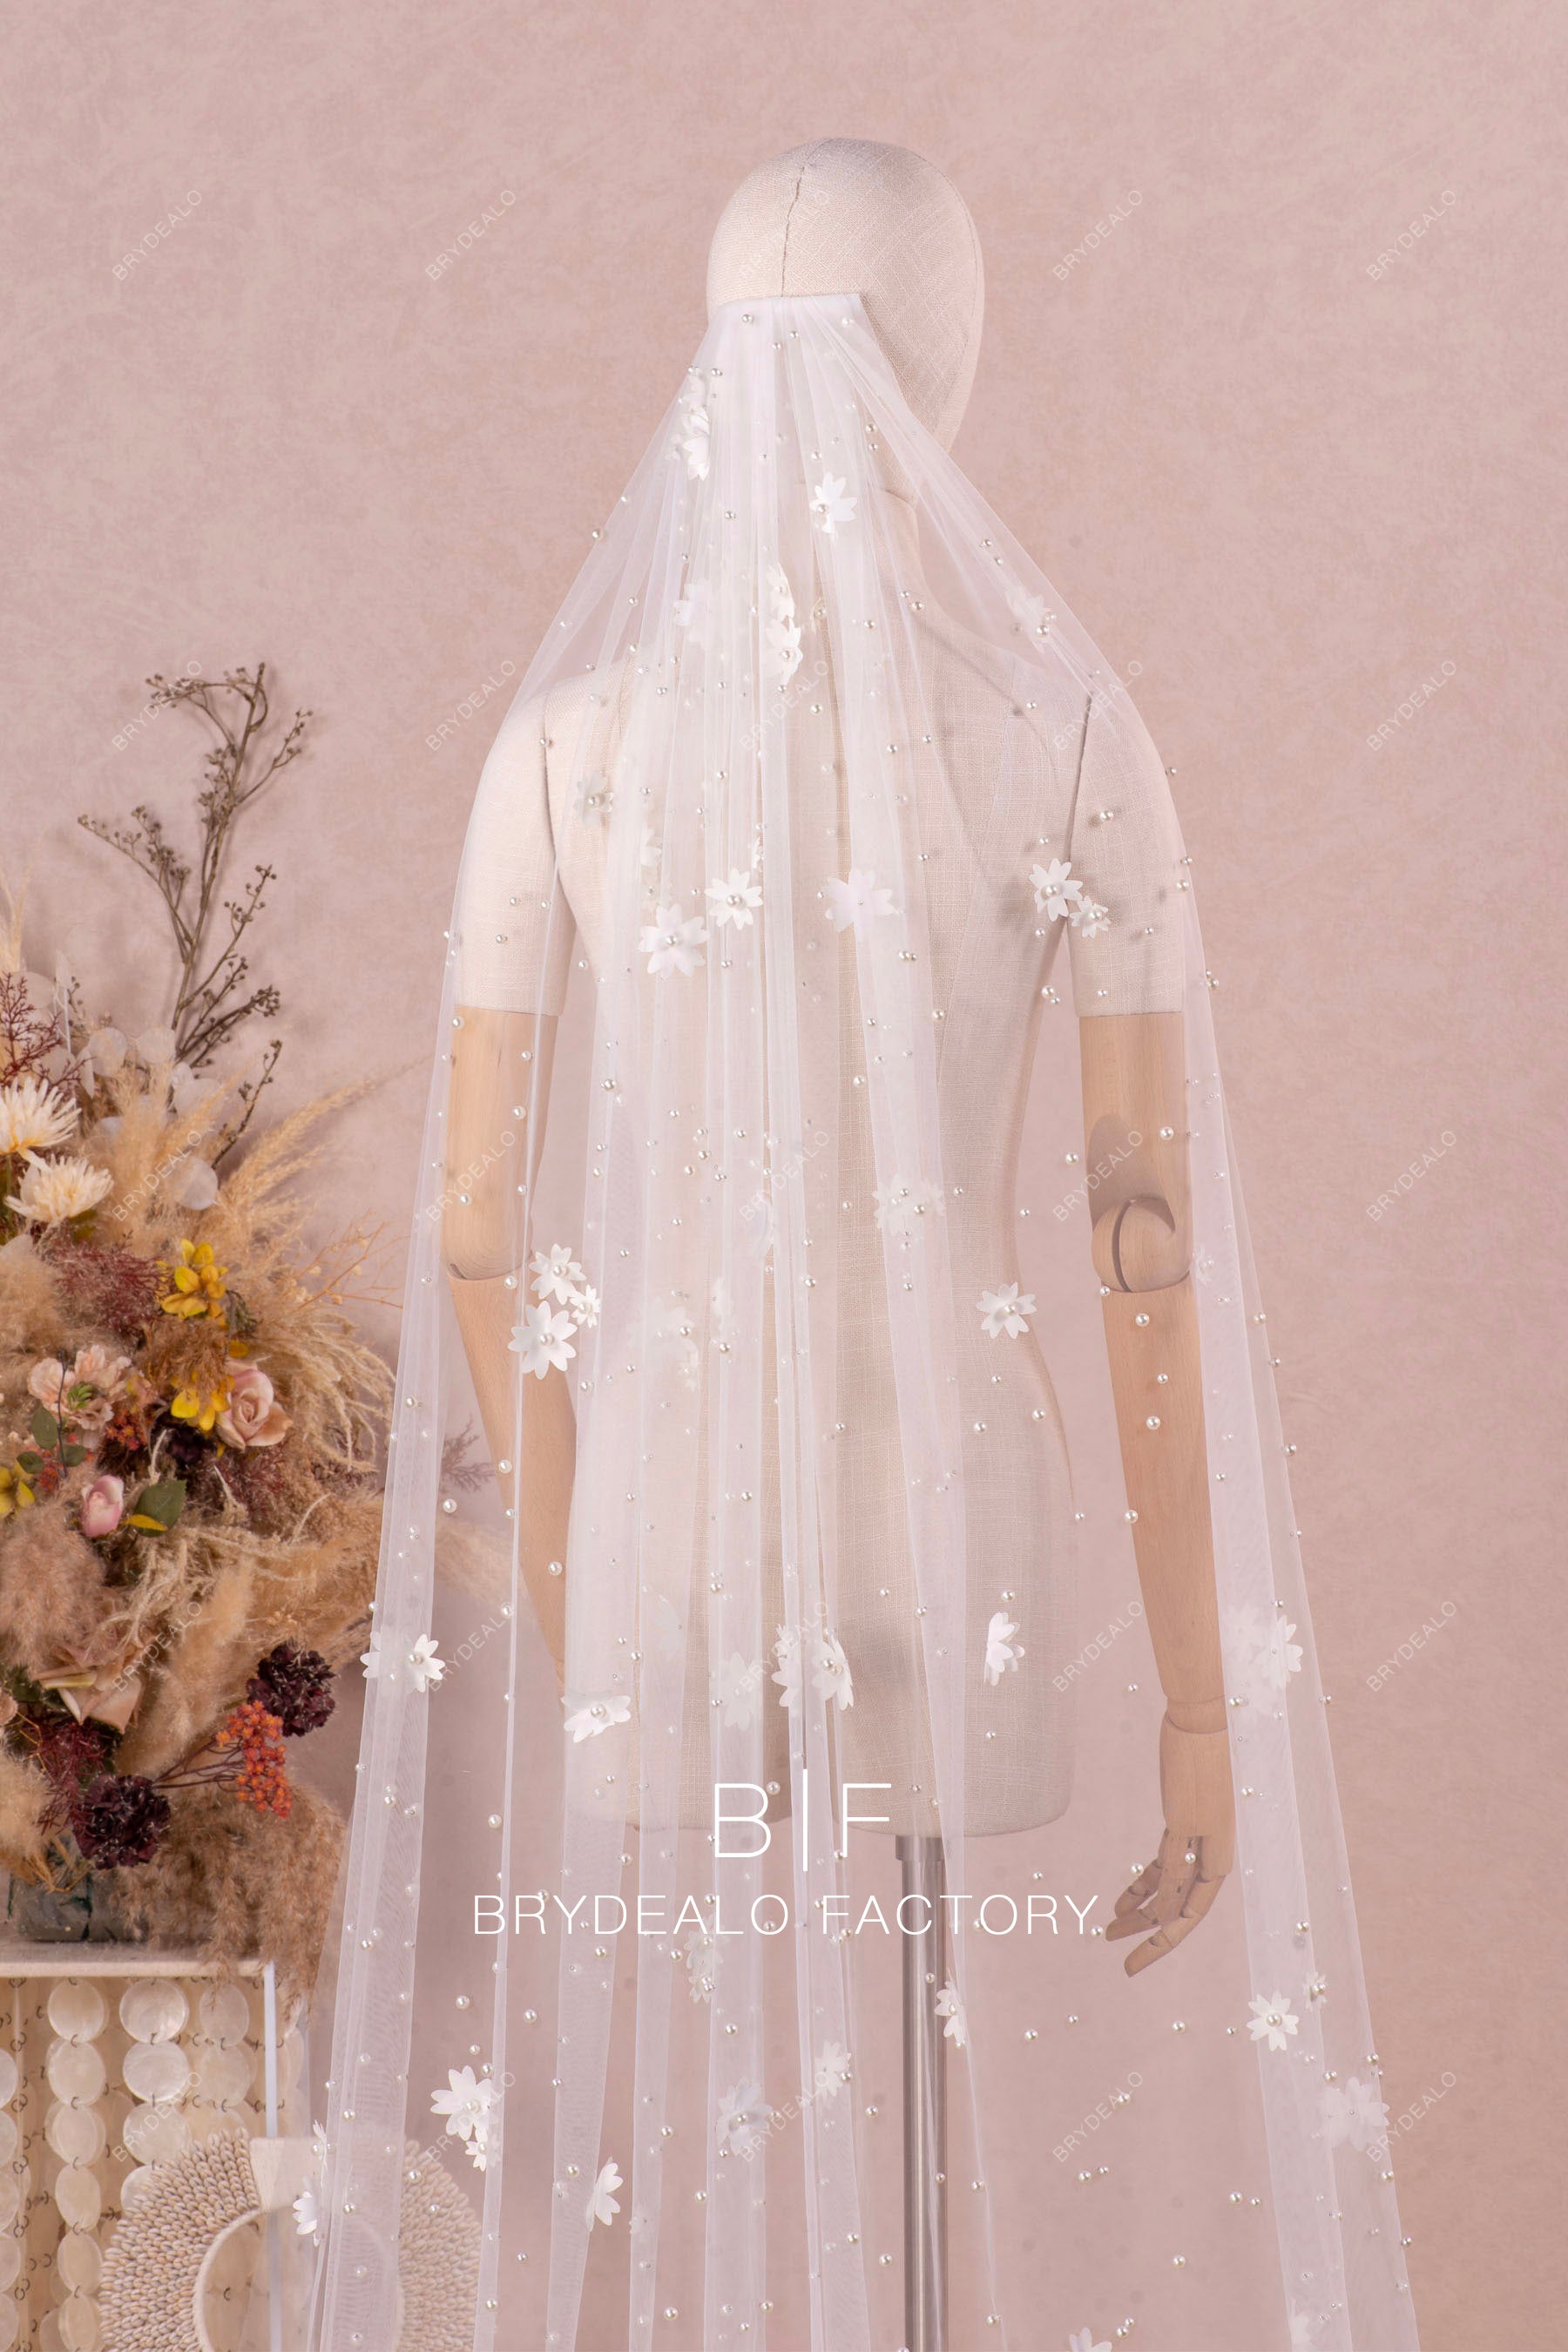 BV126 Wedding Veil Flowers Appliques Pearls (400 CM)